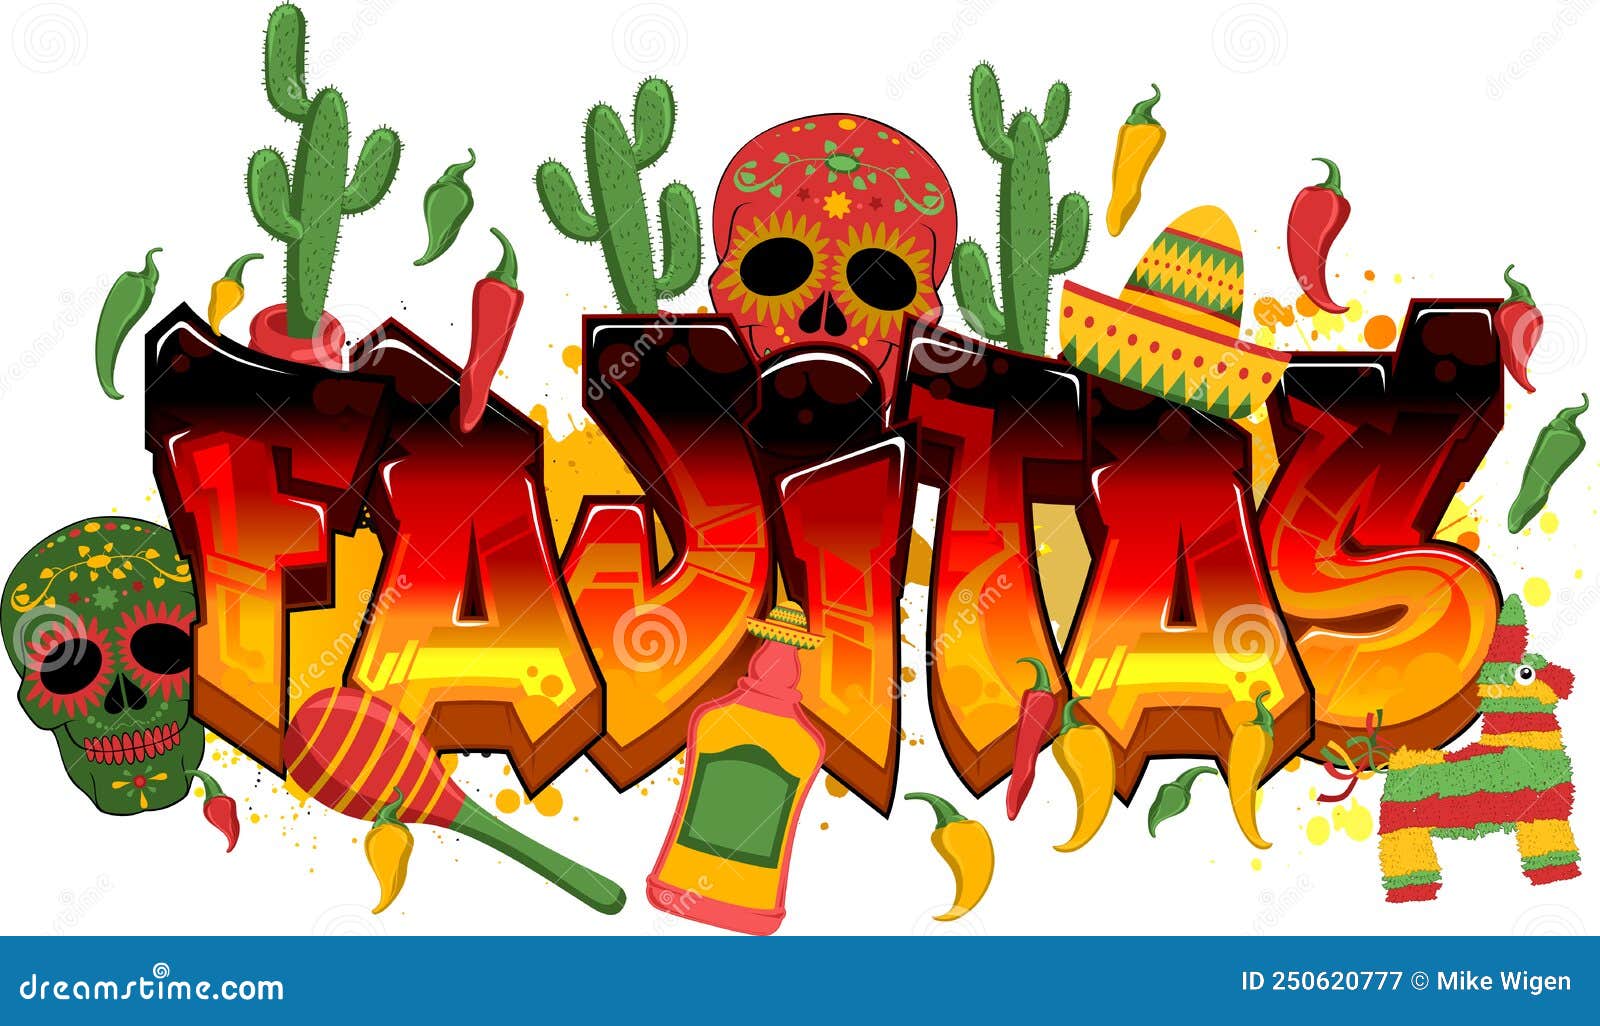 quality mexican food themed  graphic  - fajitas